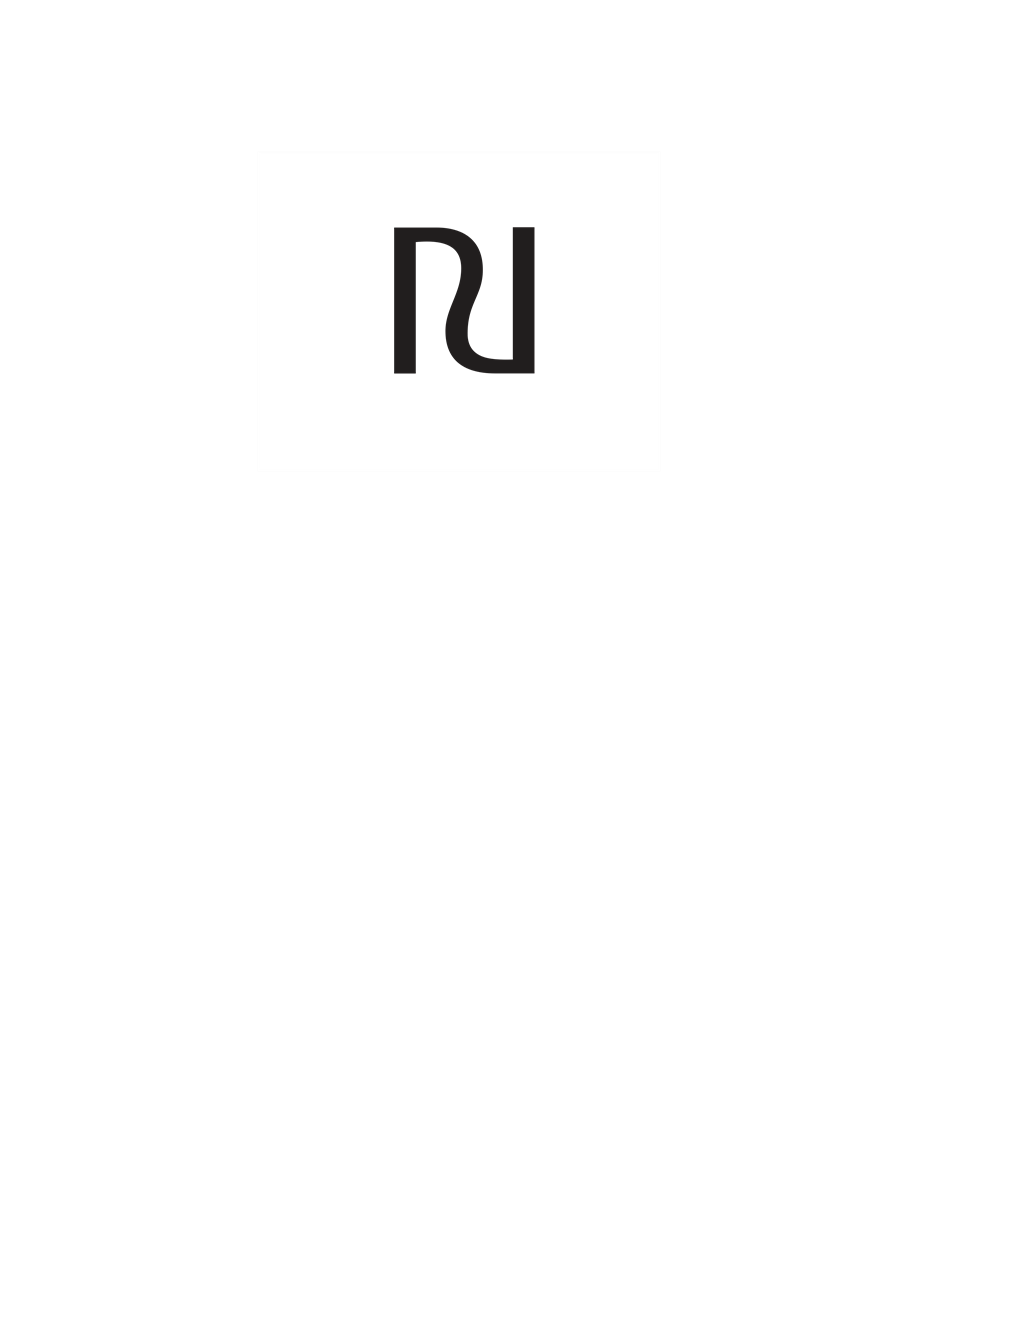 River Island logotype, transparent .png, medium, large